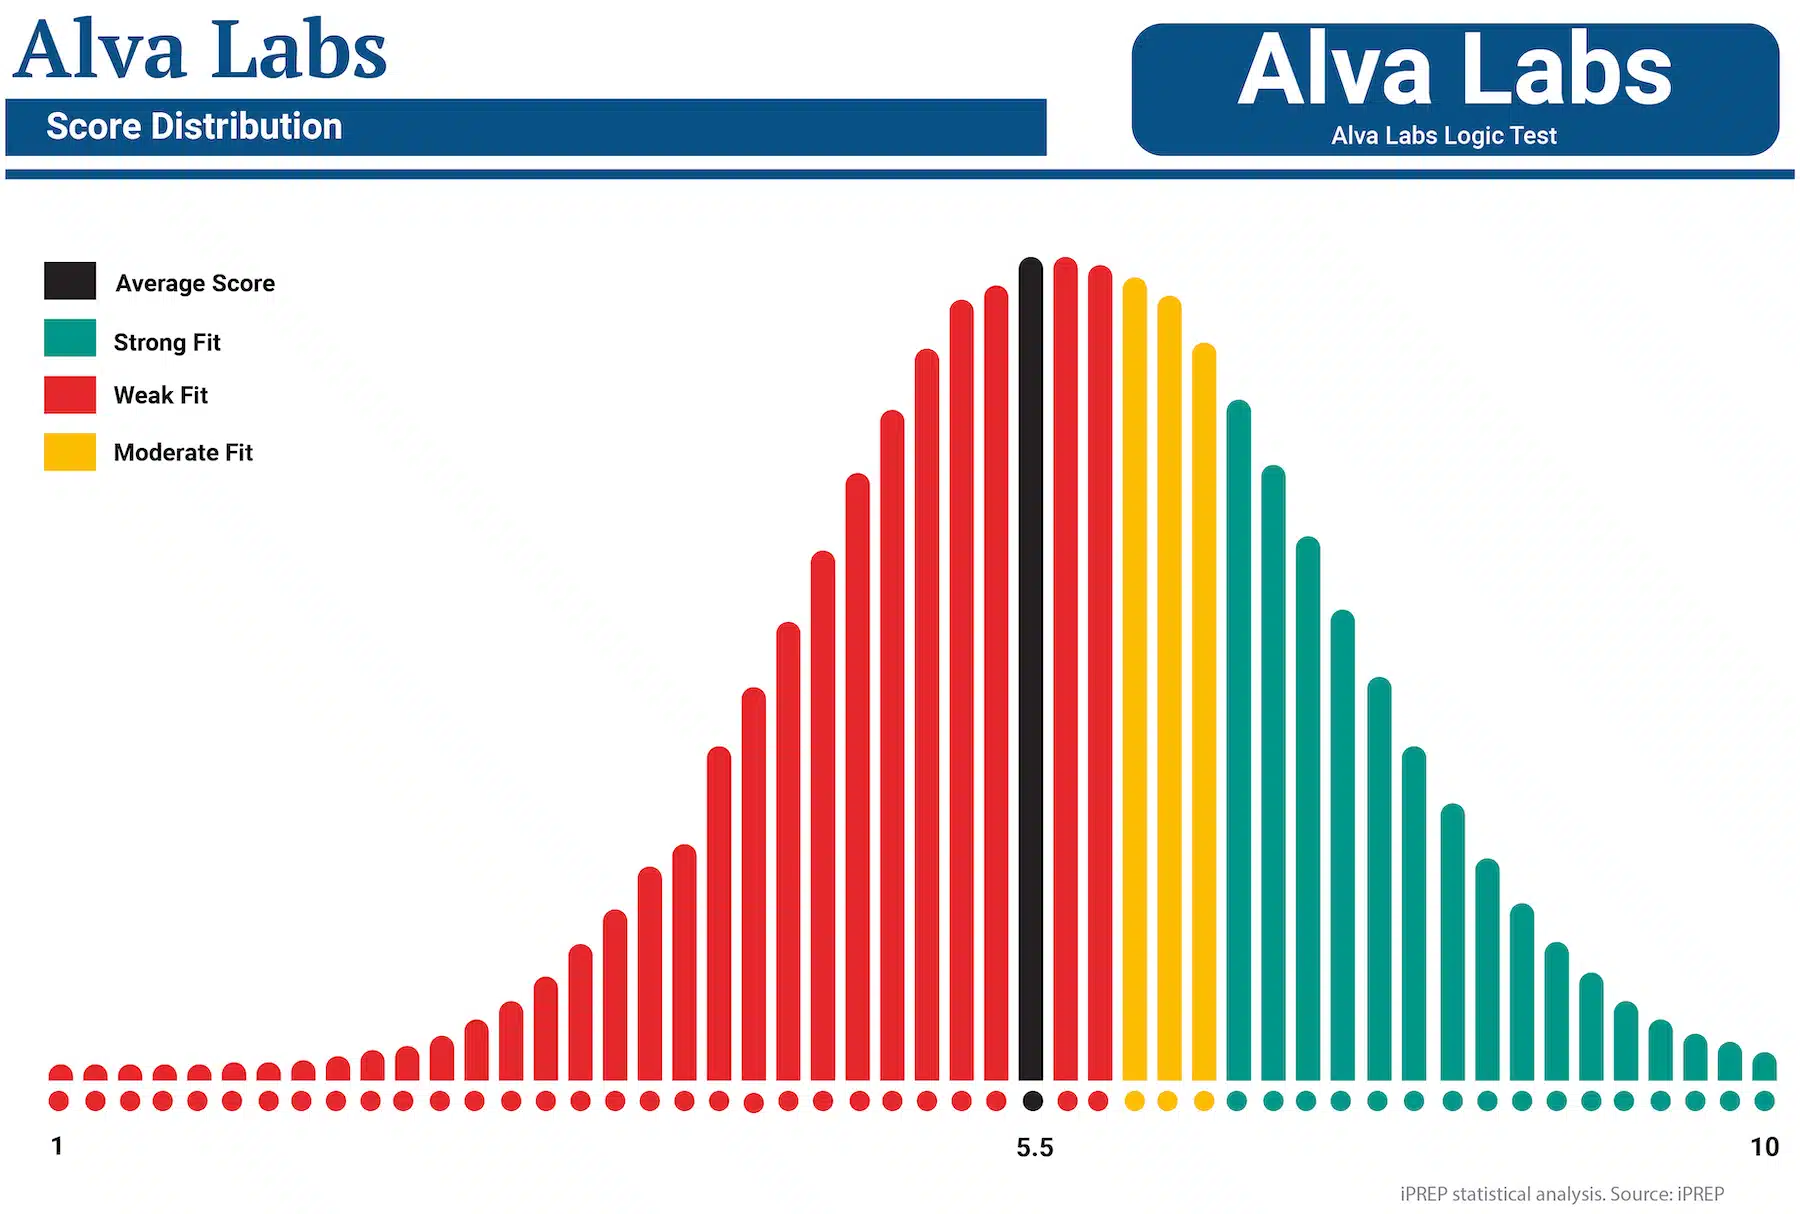 Alva Labs Logic Test score distribution statistical analysis. Source: iPREP